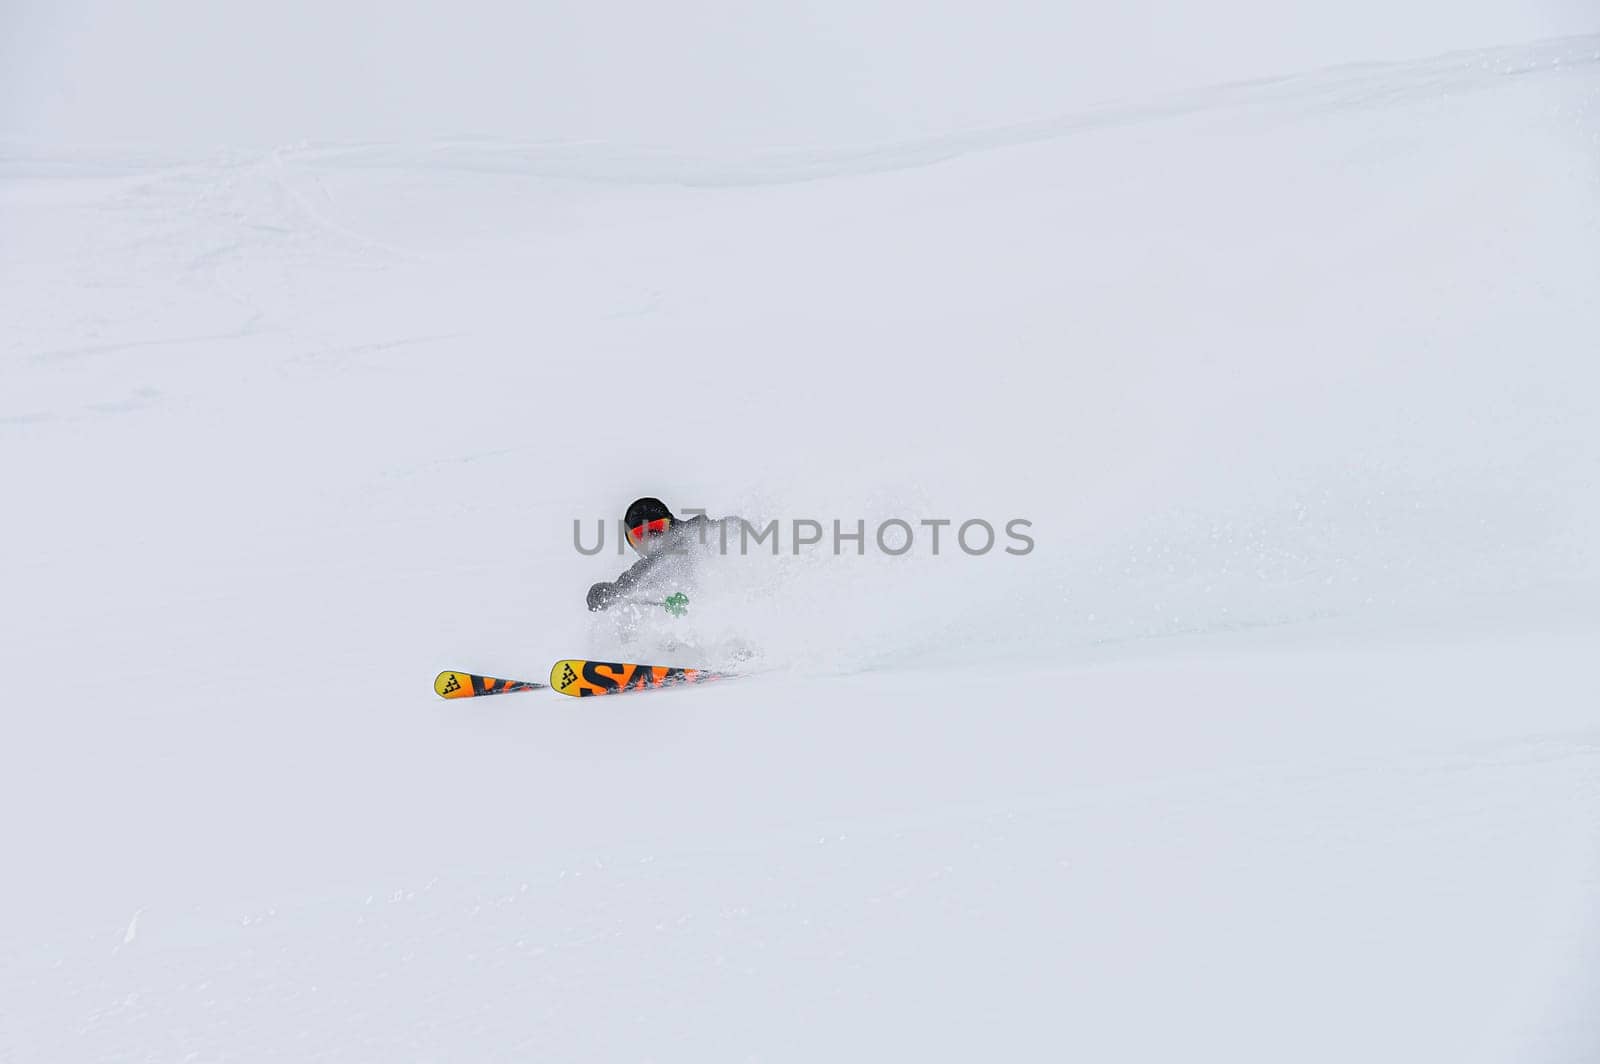 Male skier turns in loose snow, skier downhill downhill at ski resort by yanik88